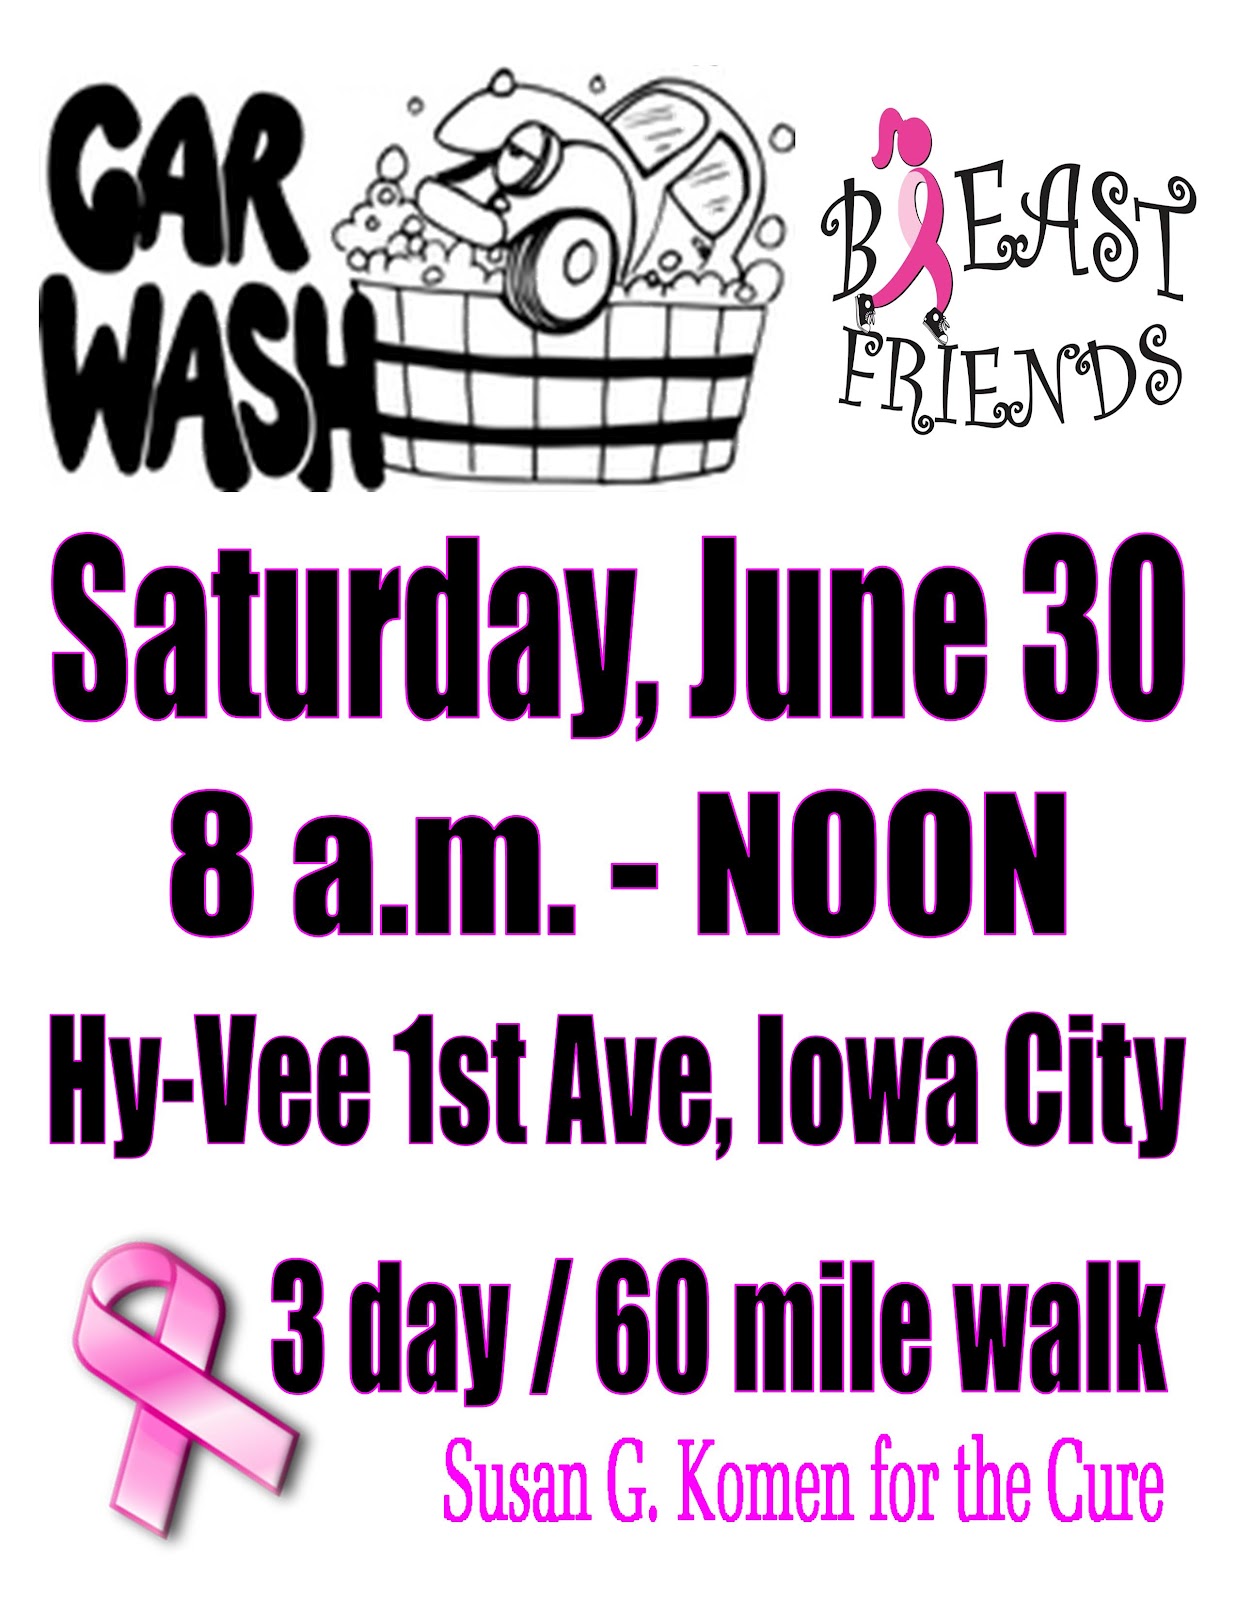 Car+wash+poster